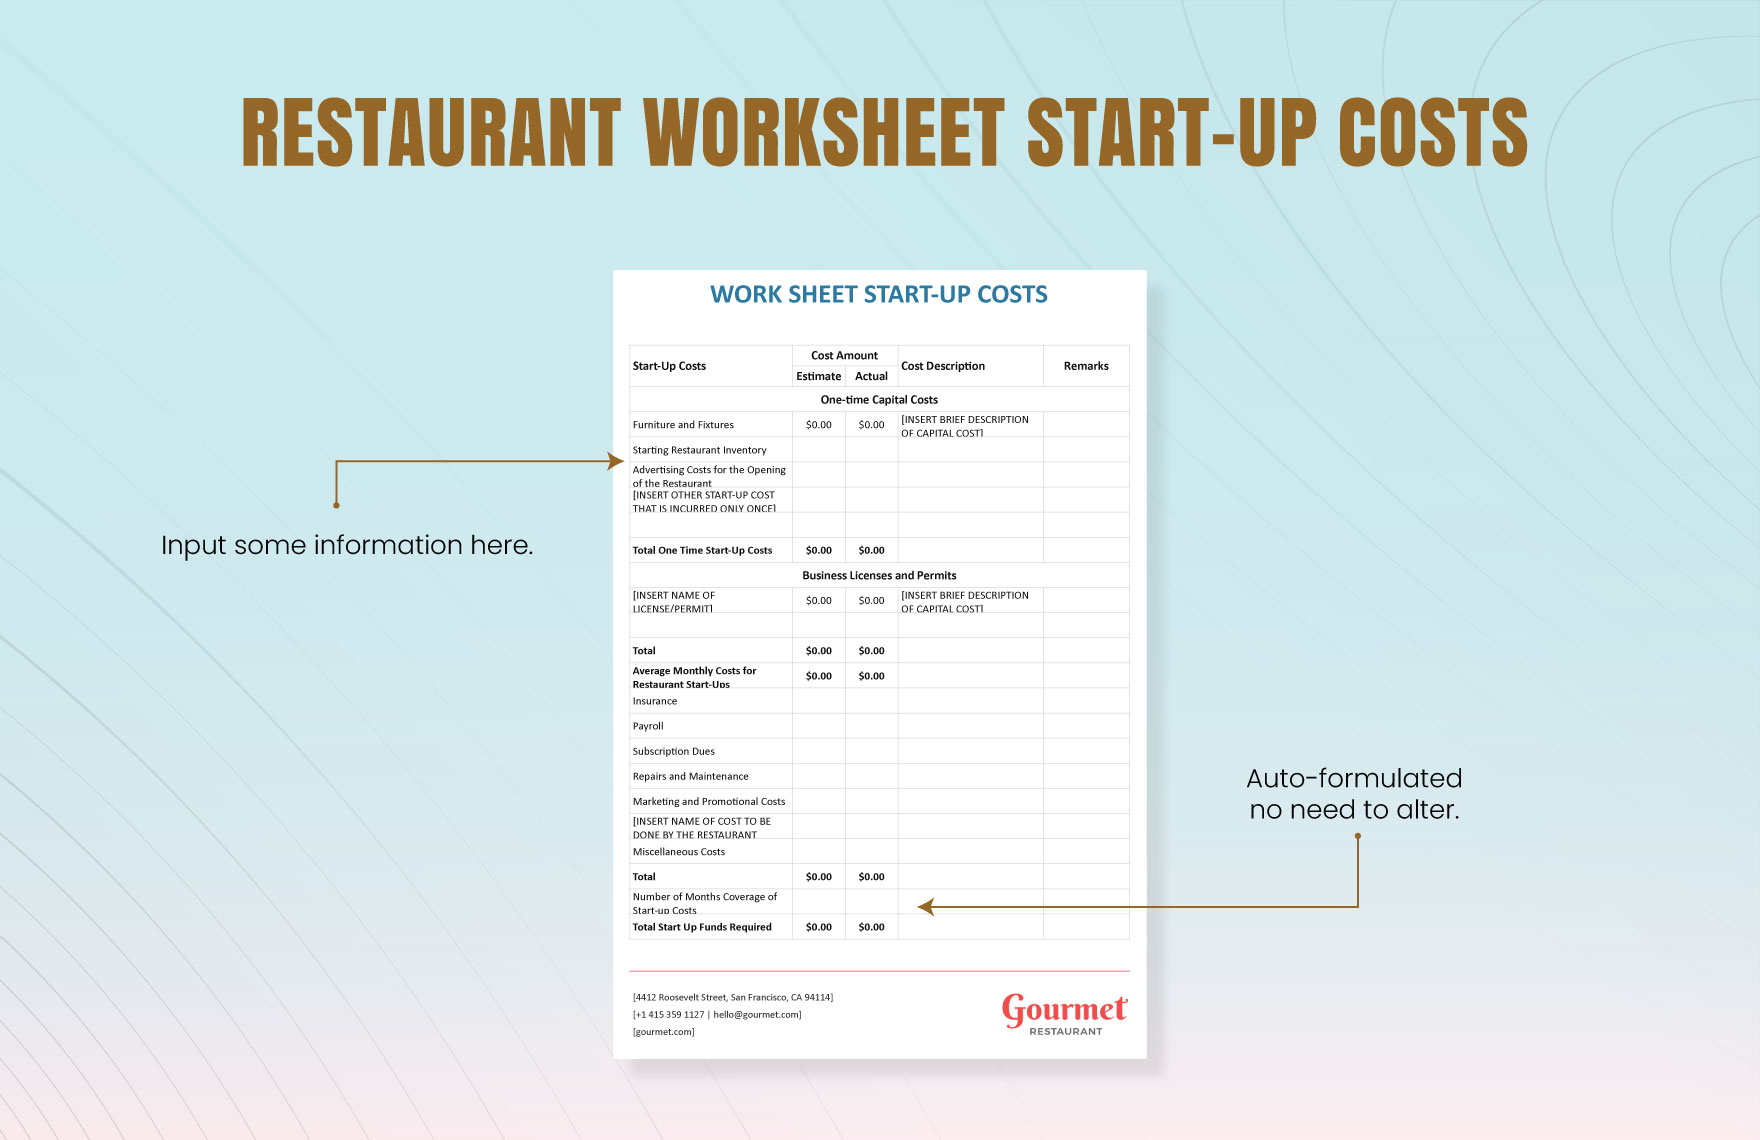 Restaurant Worksheet Start-Up Costs Template